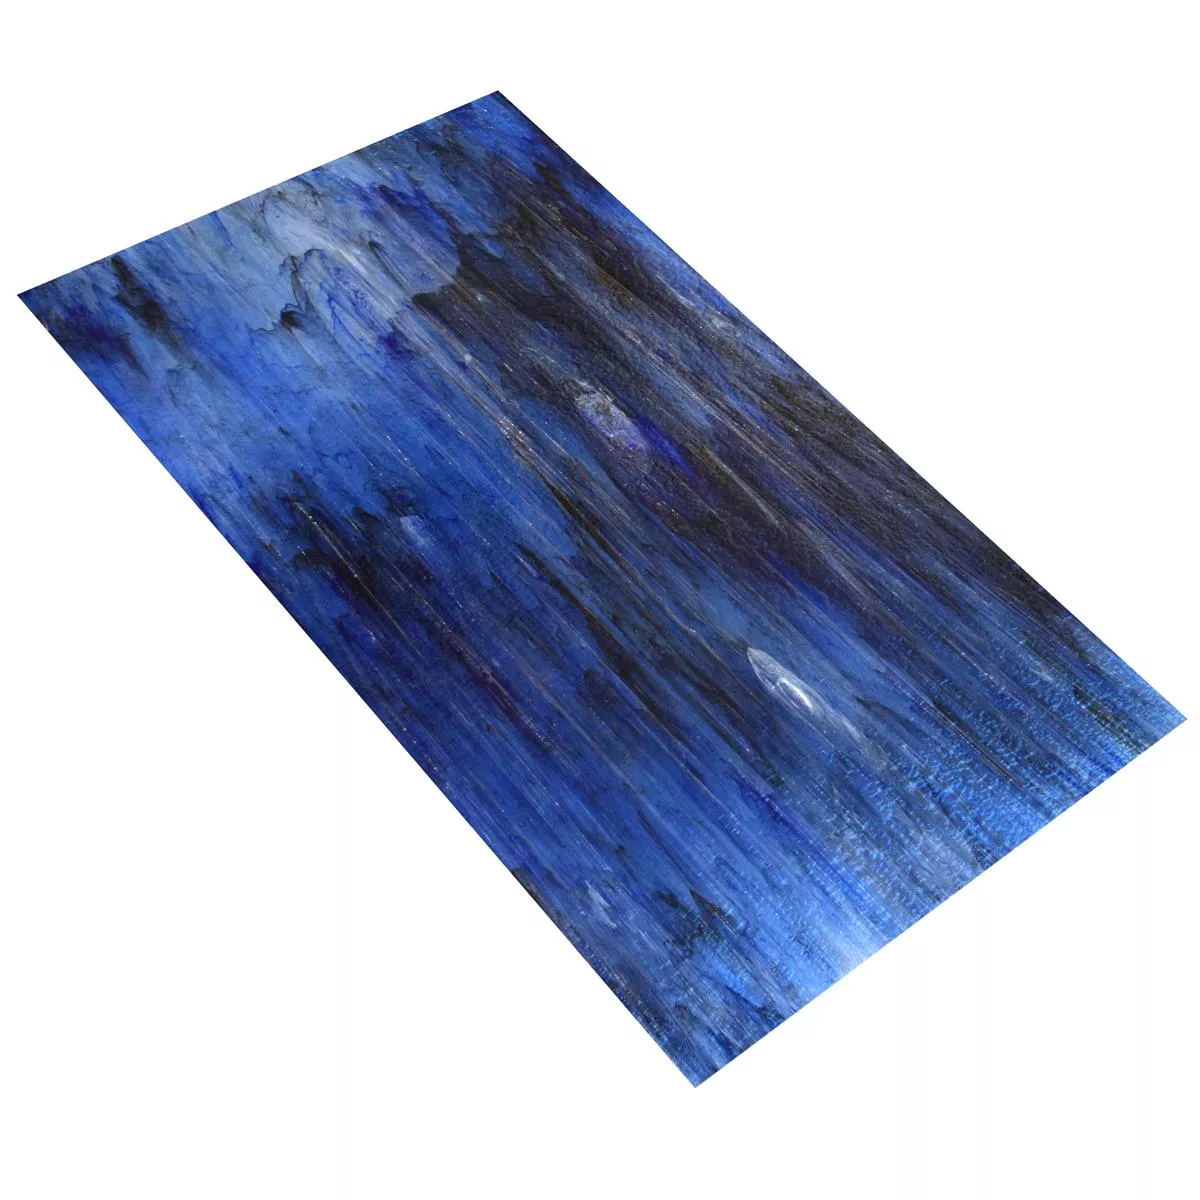 Staklo Zidne Pločice Trend-Vi Supreme Galaxy Blue 30x60cm